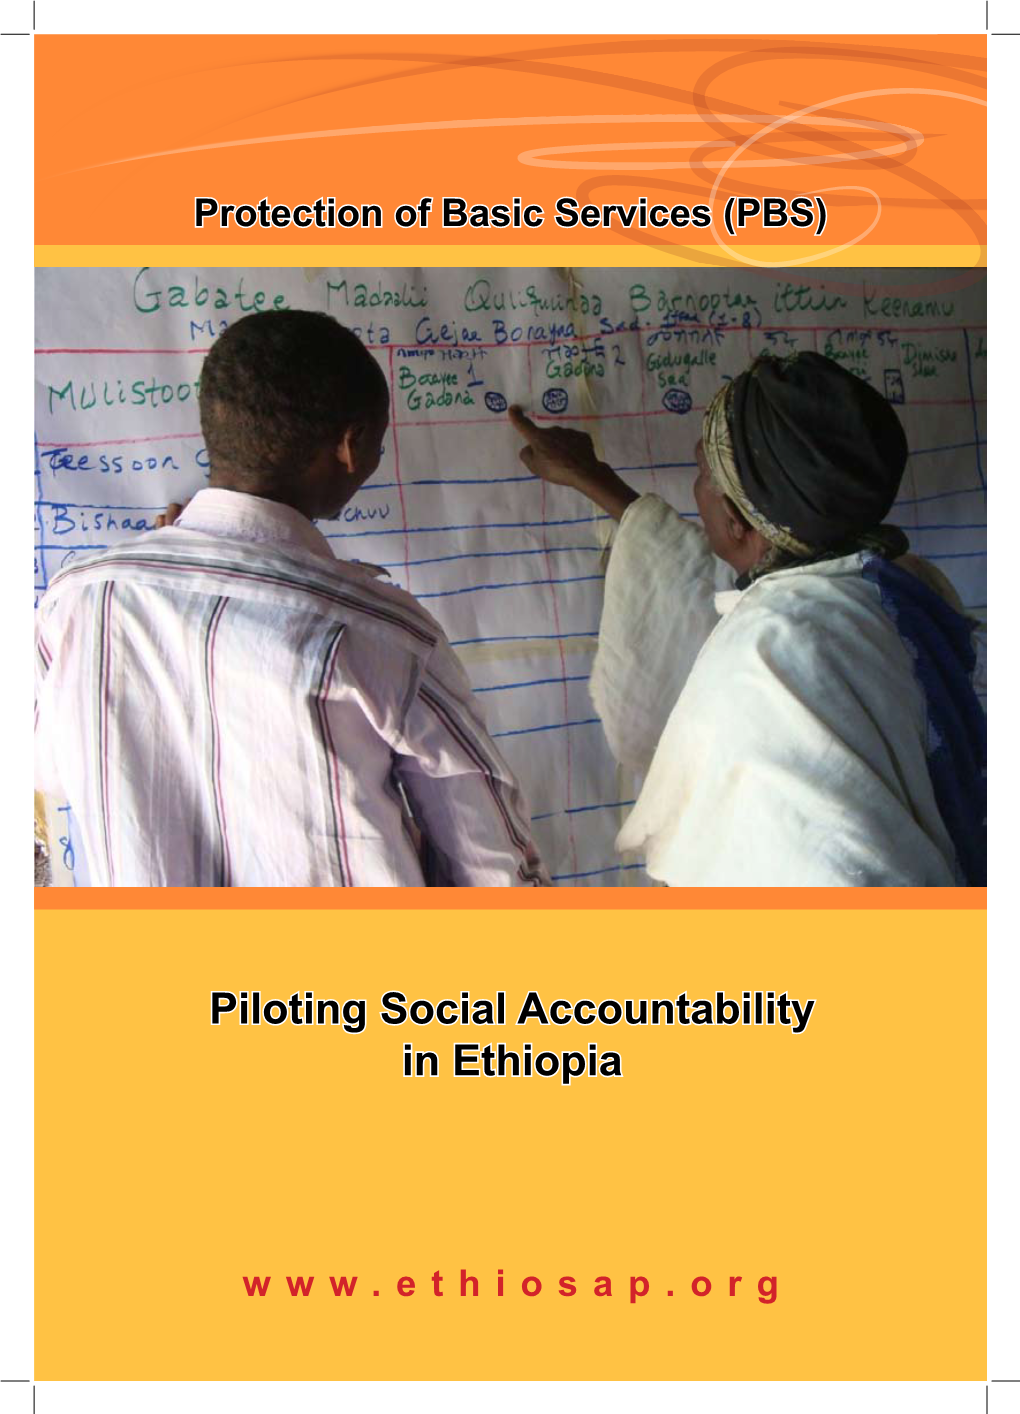 Piloting Social Accountability in Ethiopia